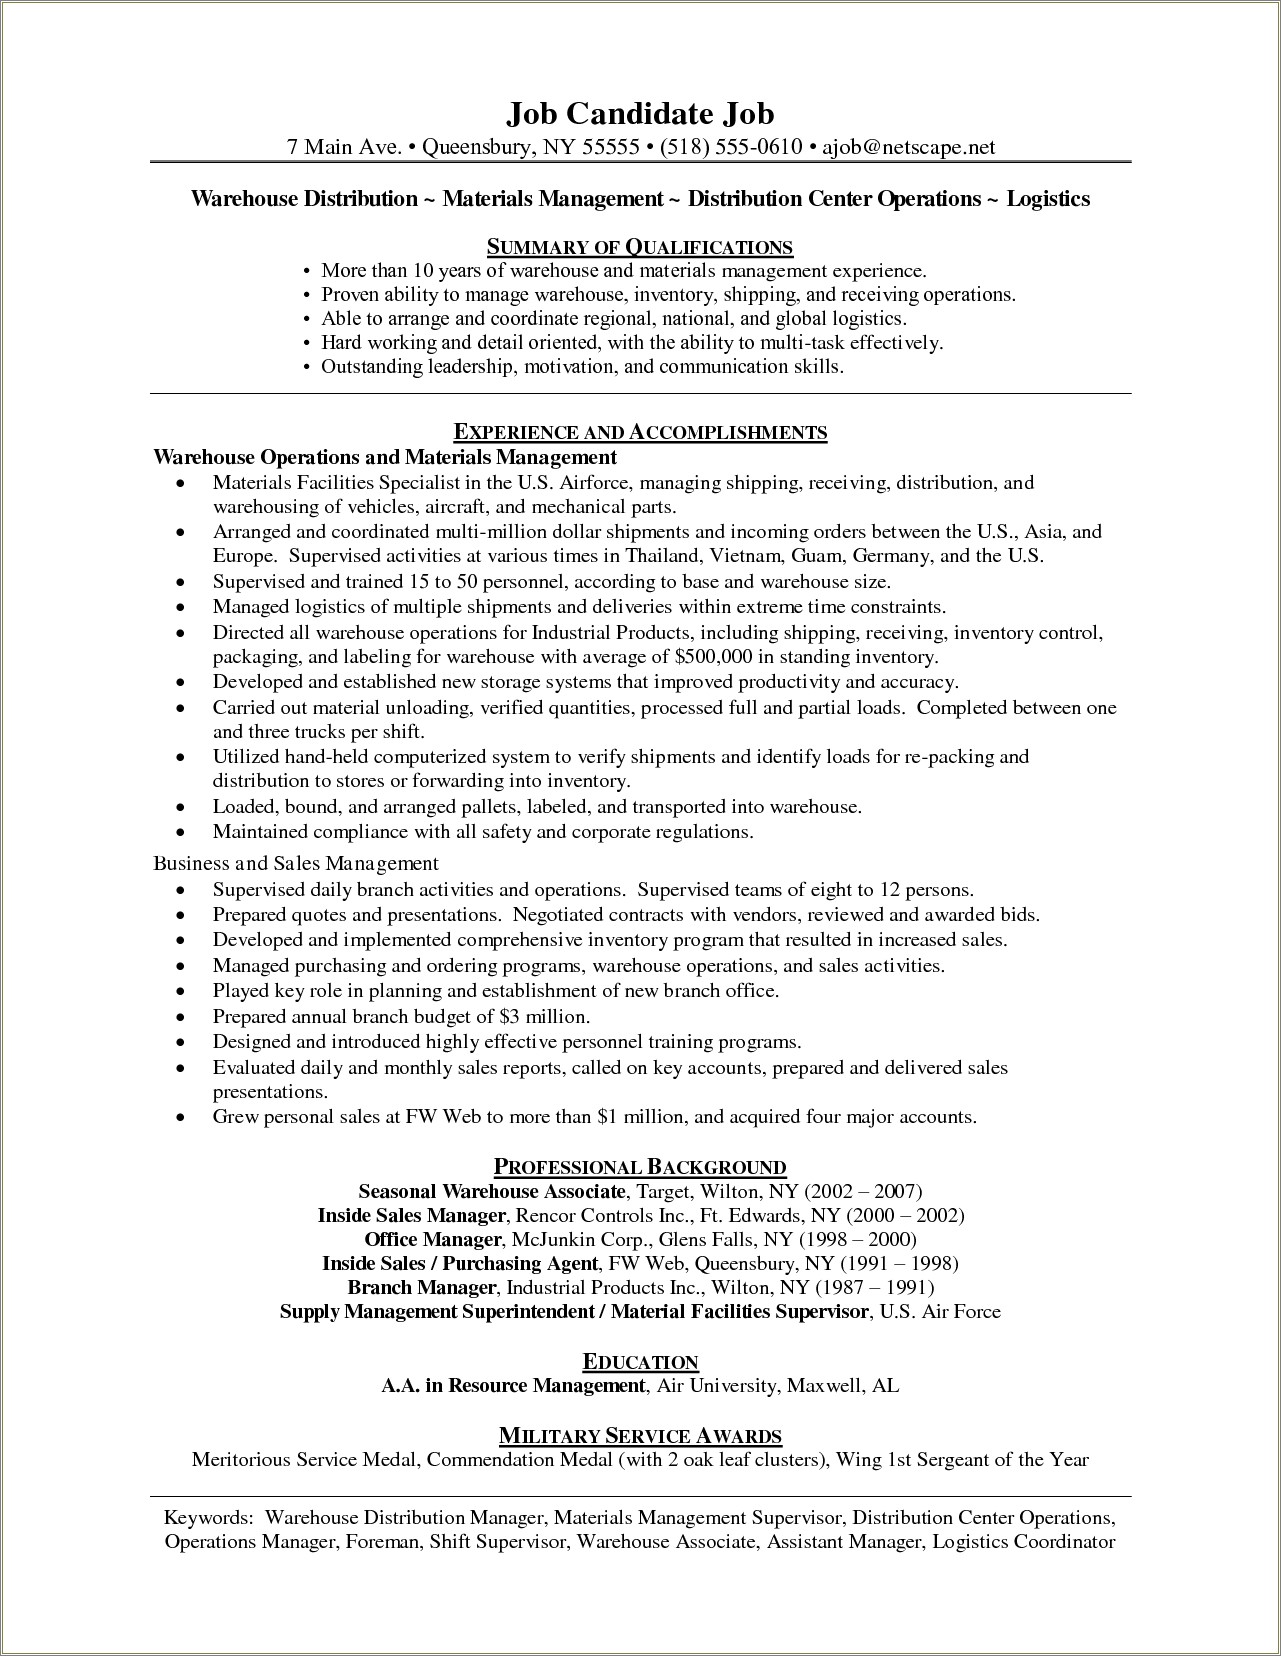 Sample Resume For Distribution Center